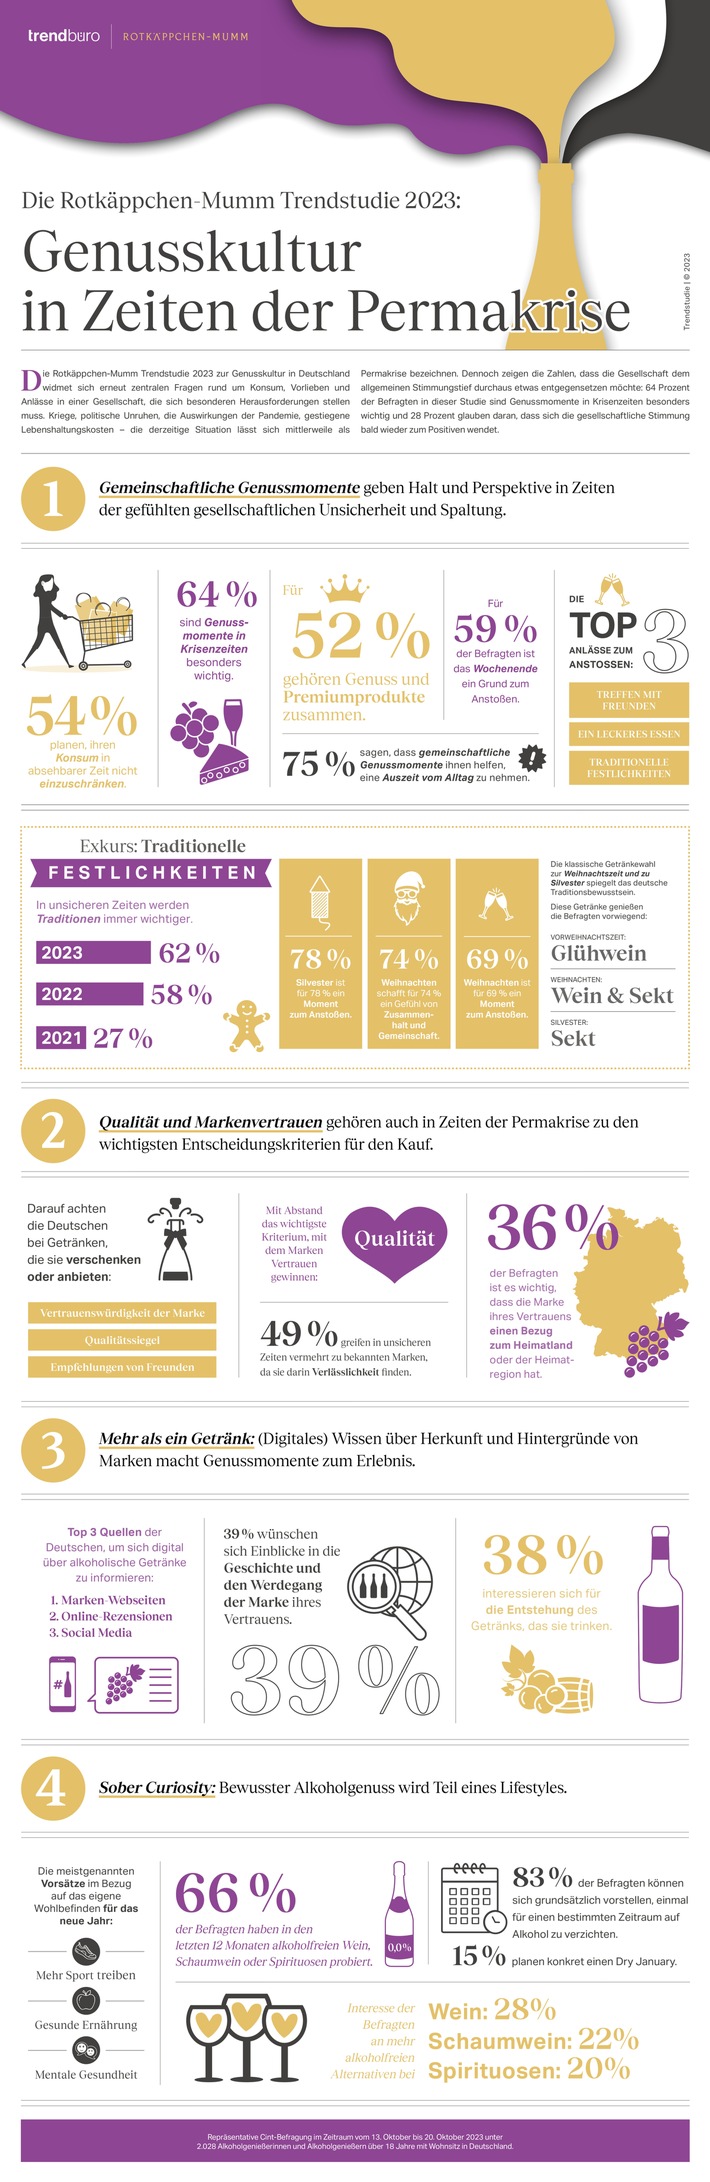 Rotkaeppchen_Mumm_Trendstudie_2023_Infografik.jpg